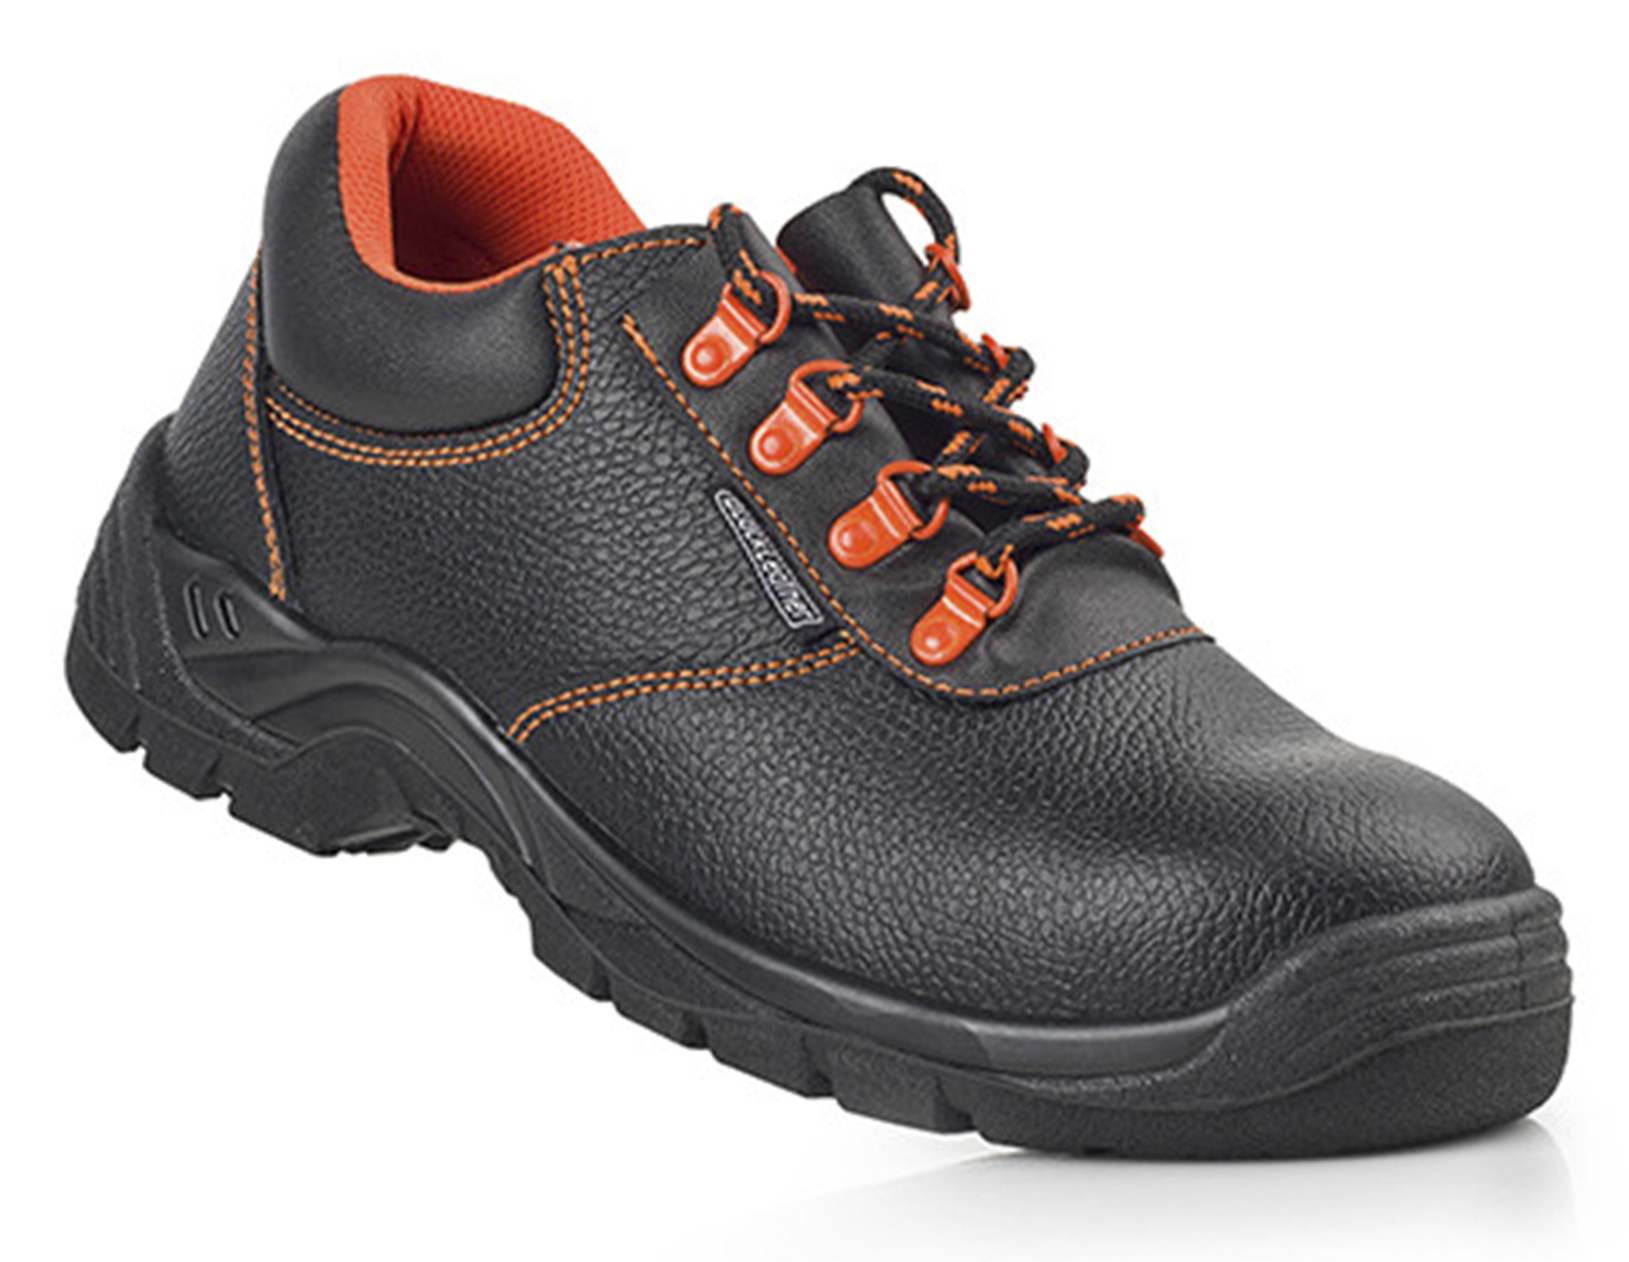 ZECO1 Safety Footwear BlackLeather Zapato mod. ZECO1 (S3 SRC E A).